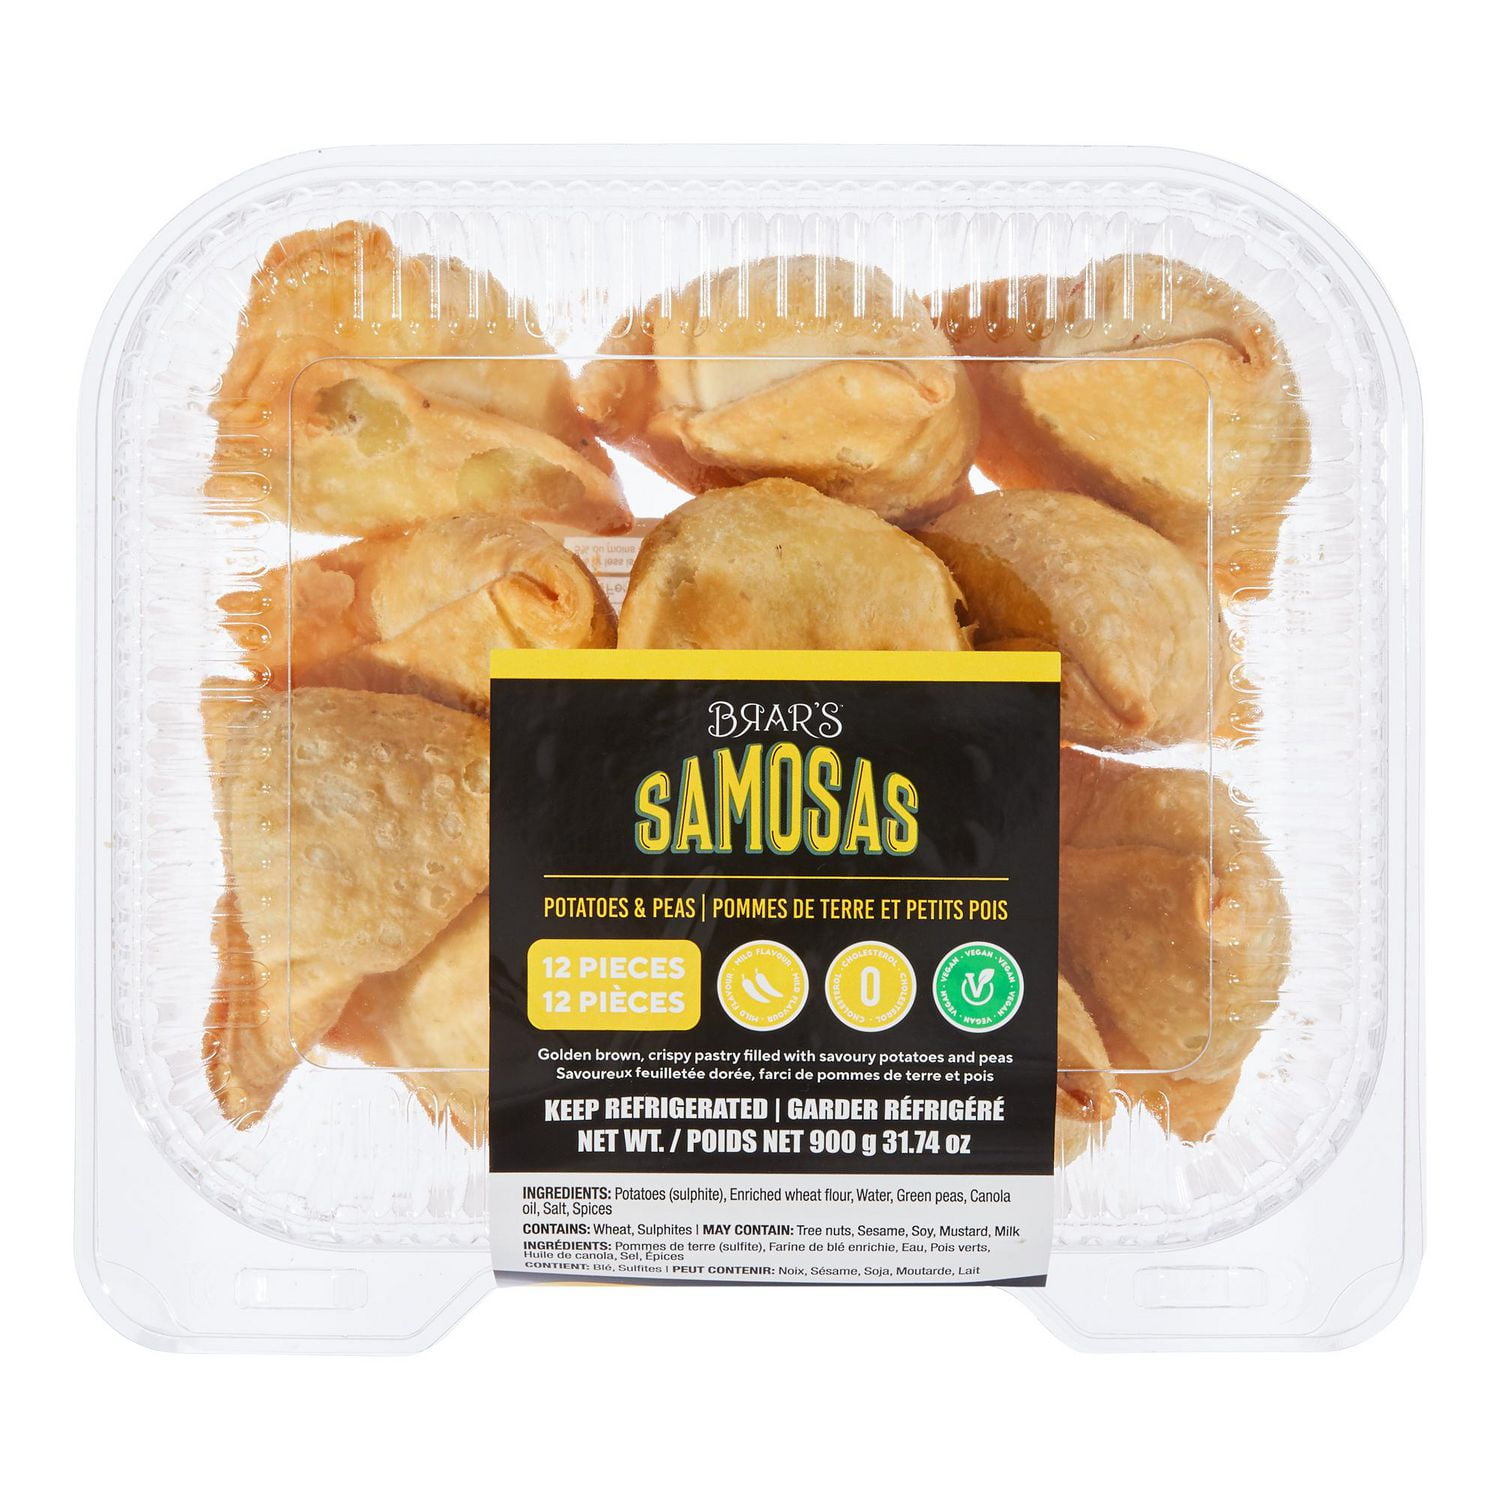 Brar's Potatoes and Peas Samosas Reviews